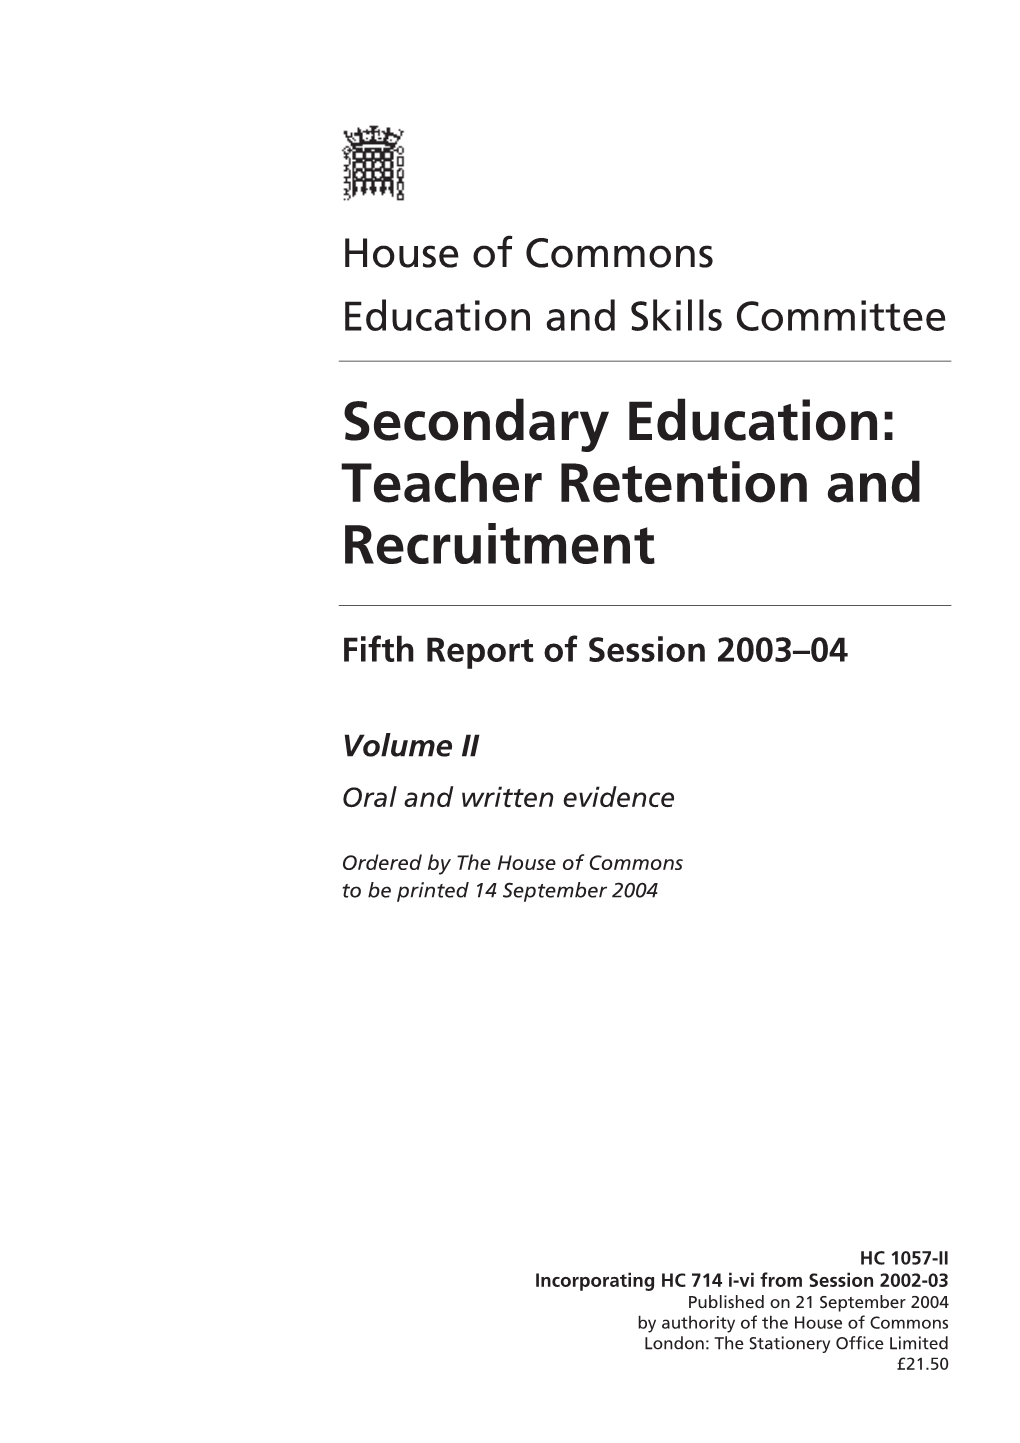 Secondary Education: Teacher Retention and Recruitment